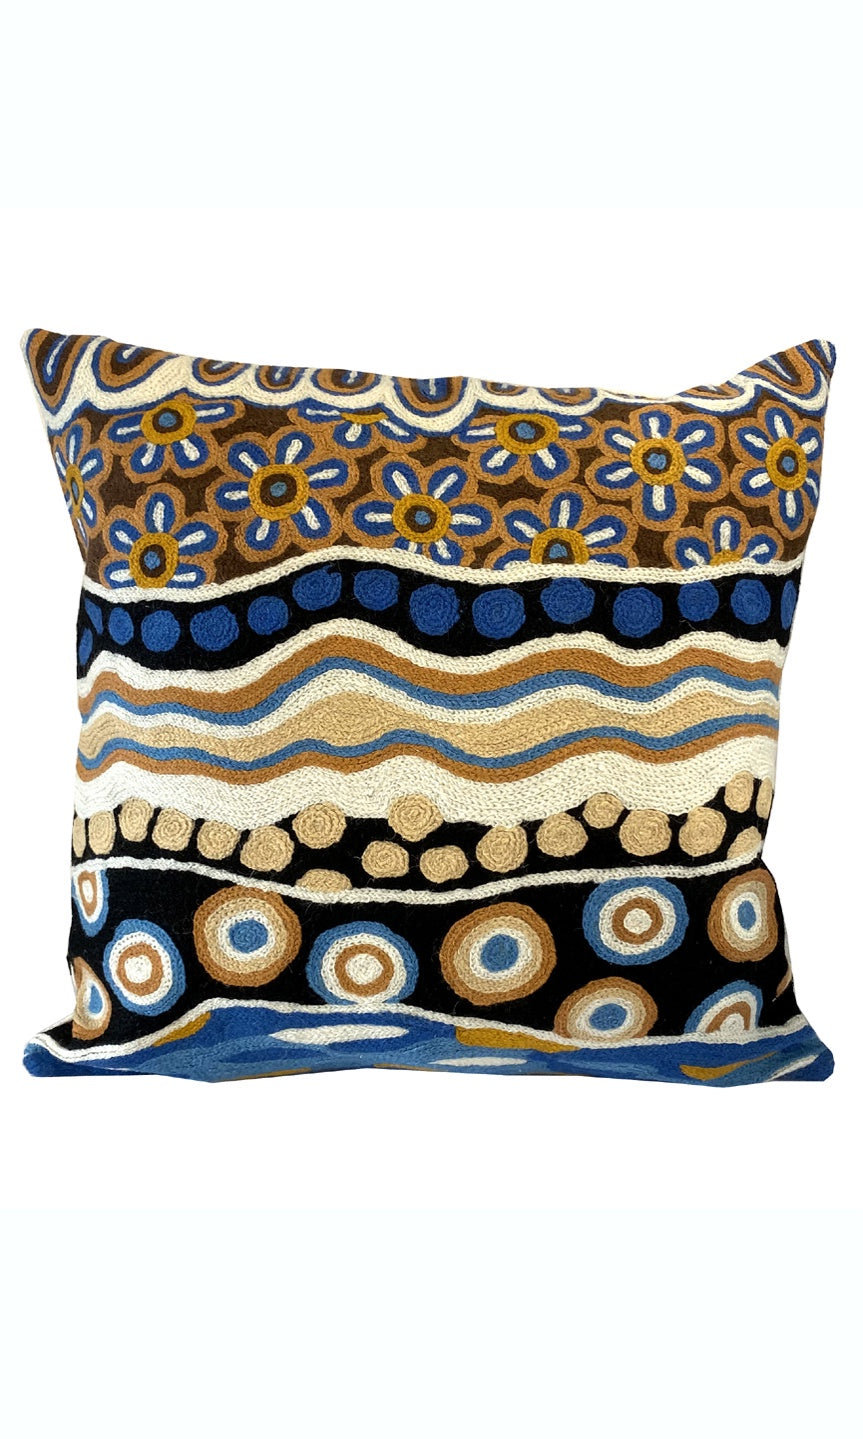 Aboriginal Art Cushion Cover by Bianca Gardener Dodd